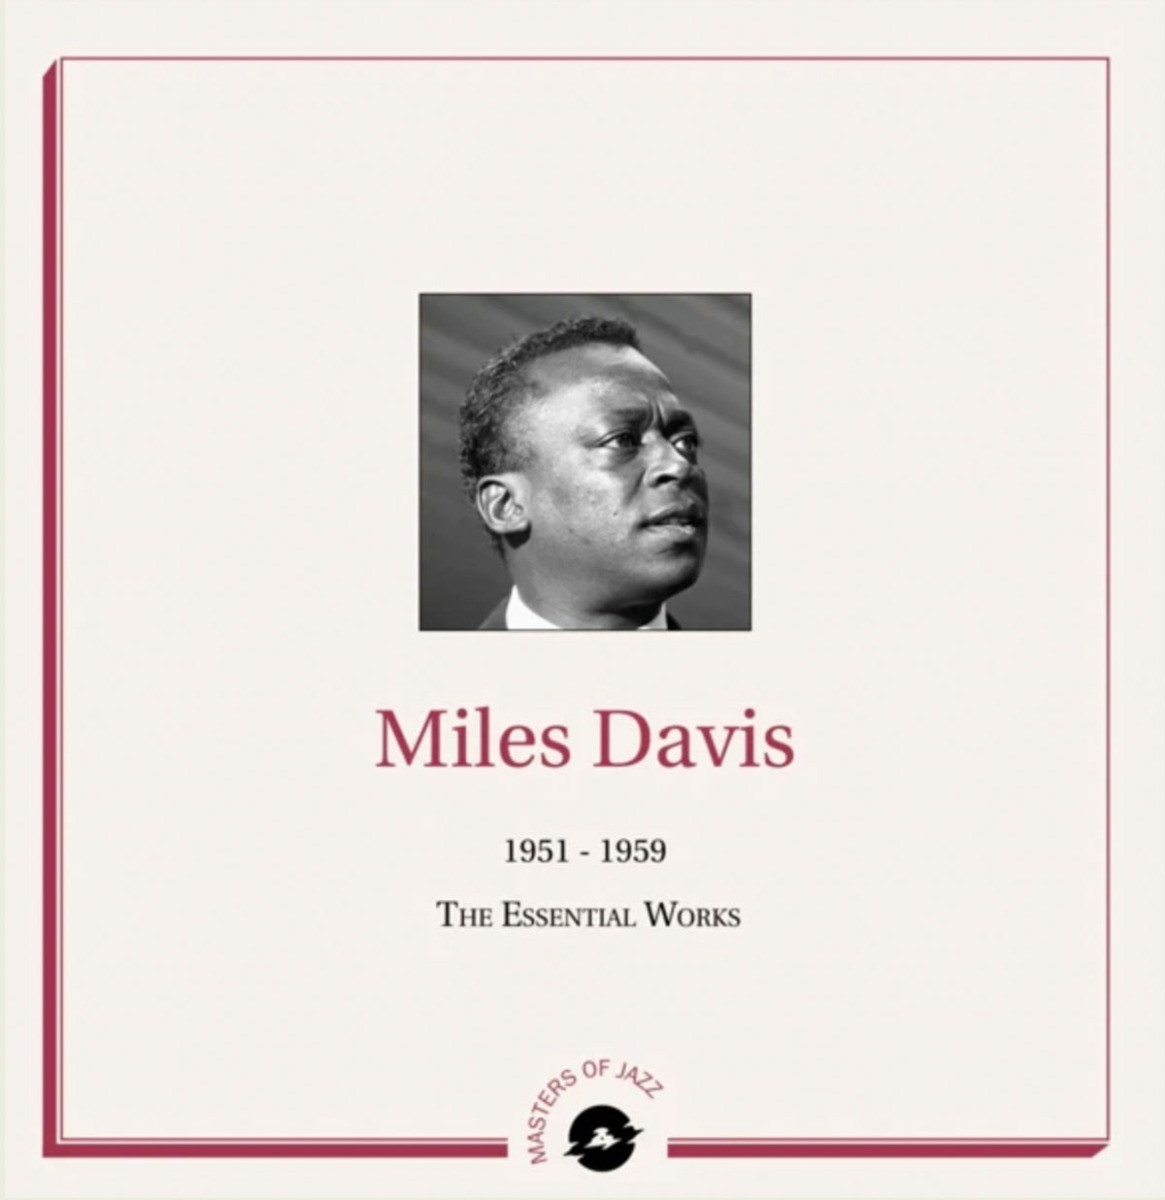 Miles Davis - 1951-1959 - The Essential Works 2LP